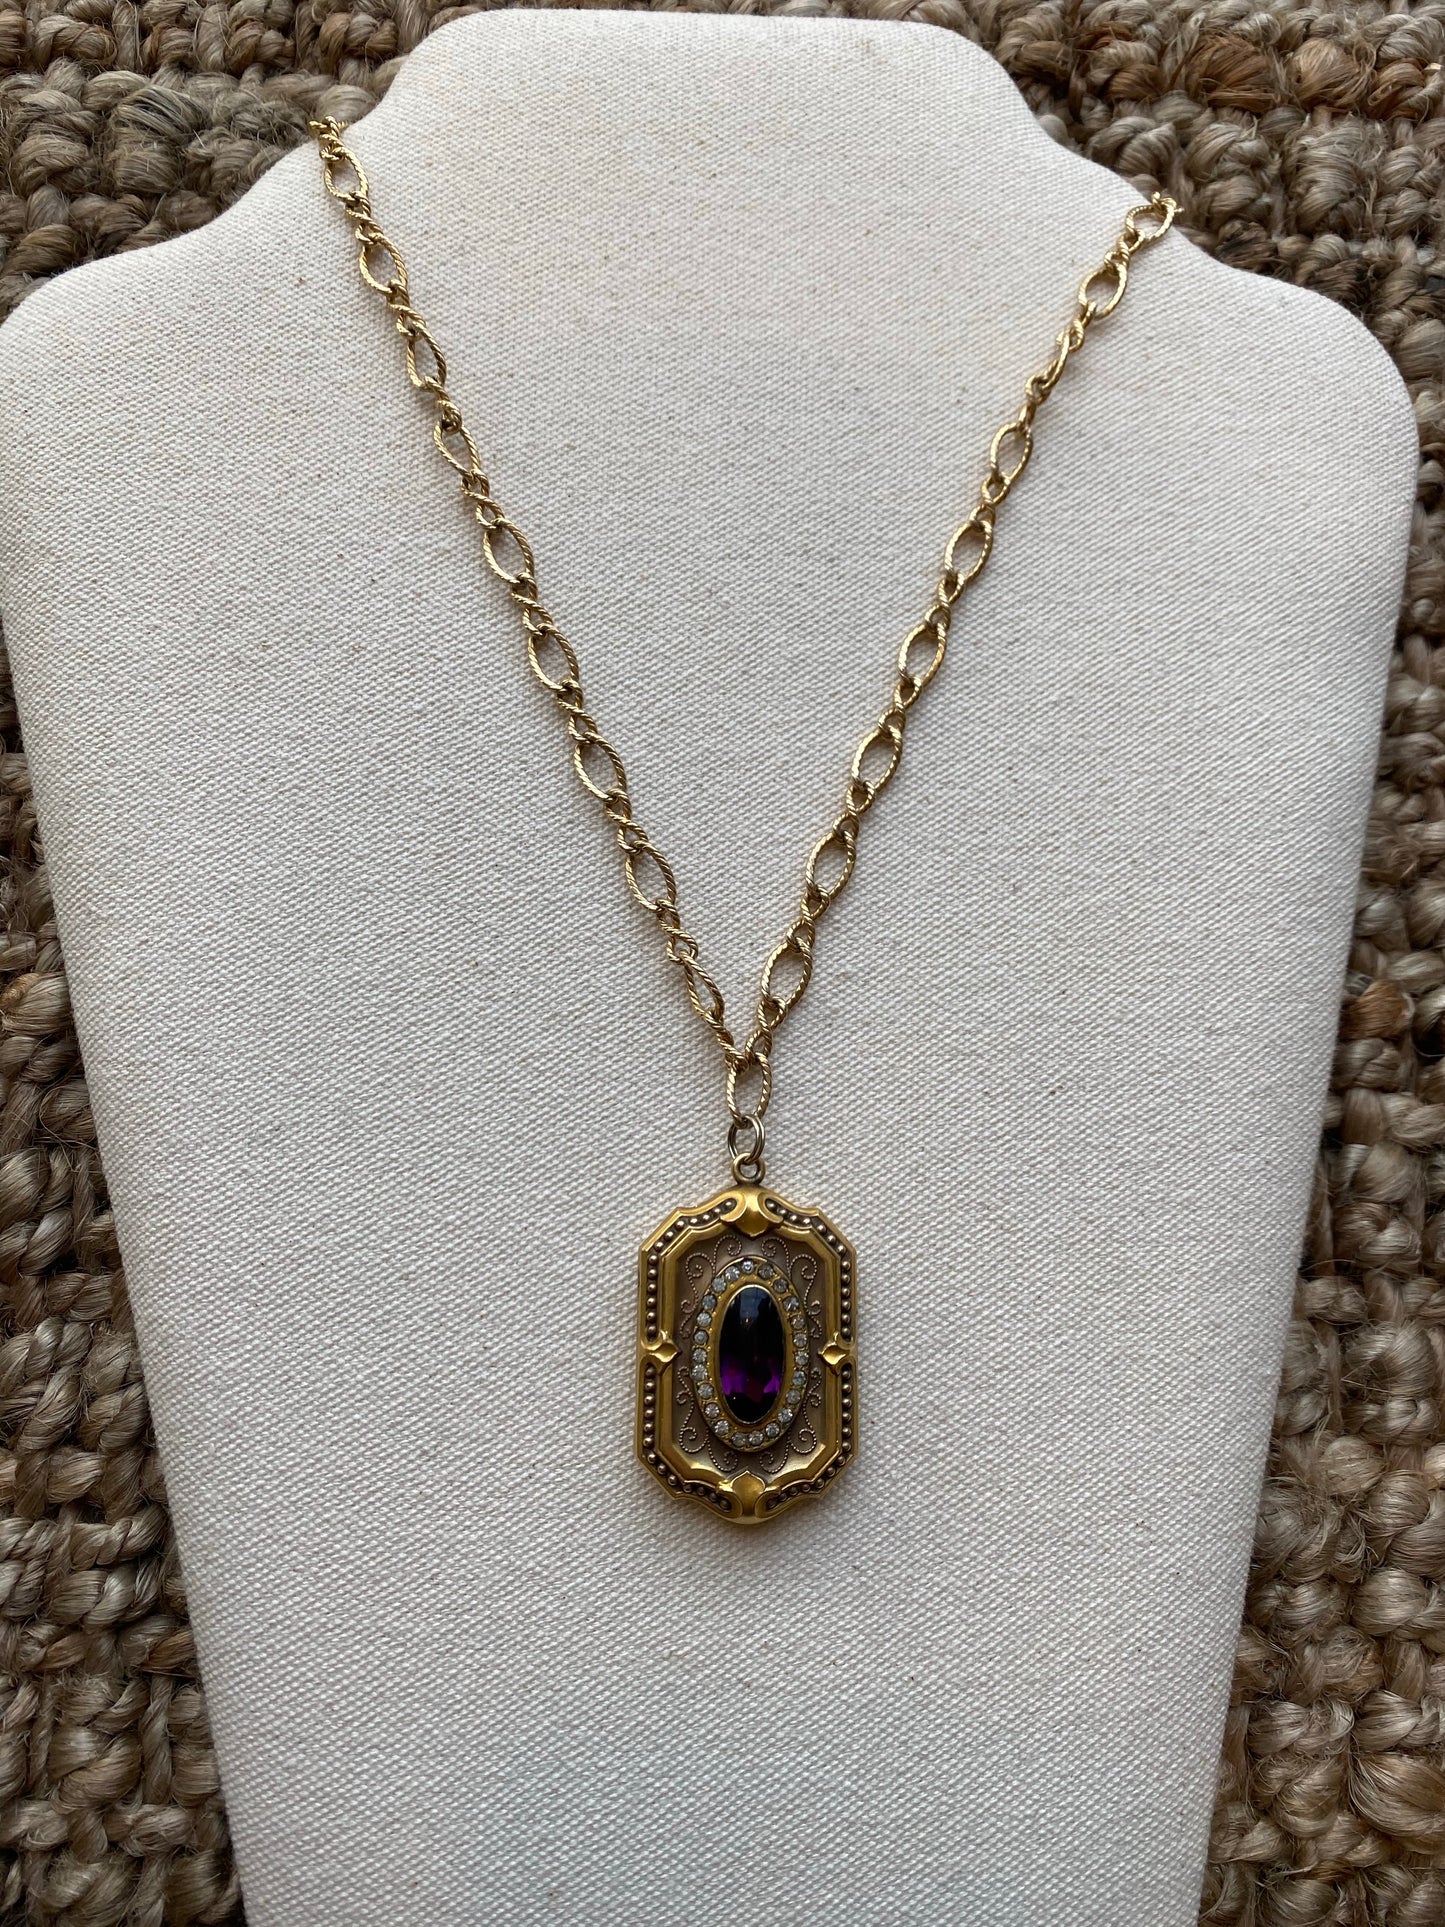 Antique Locket with purple stone, 1920's